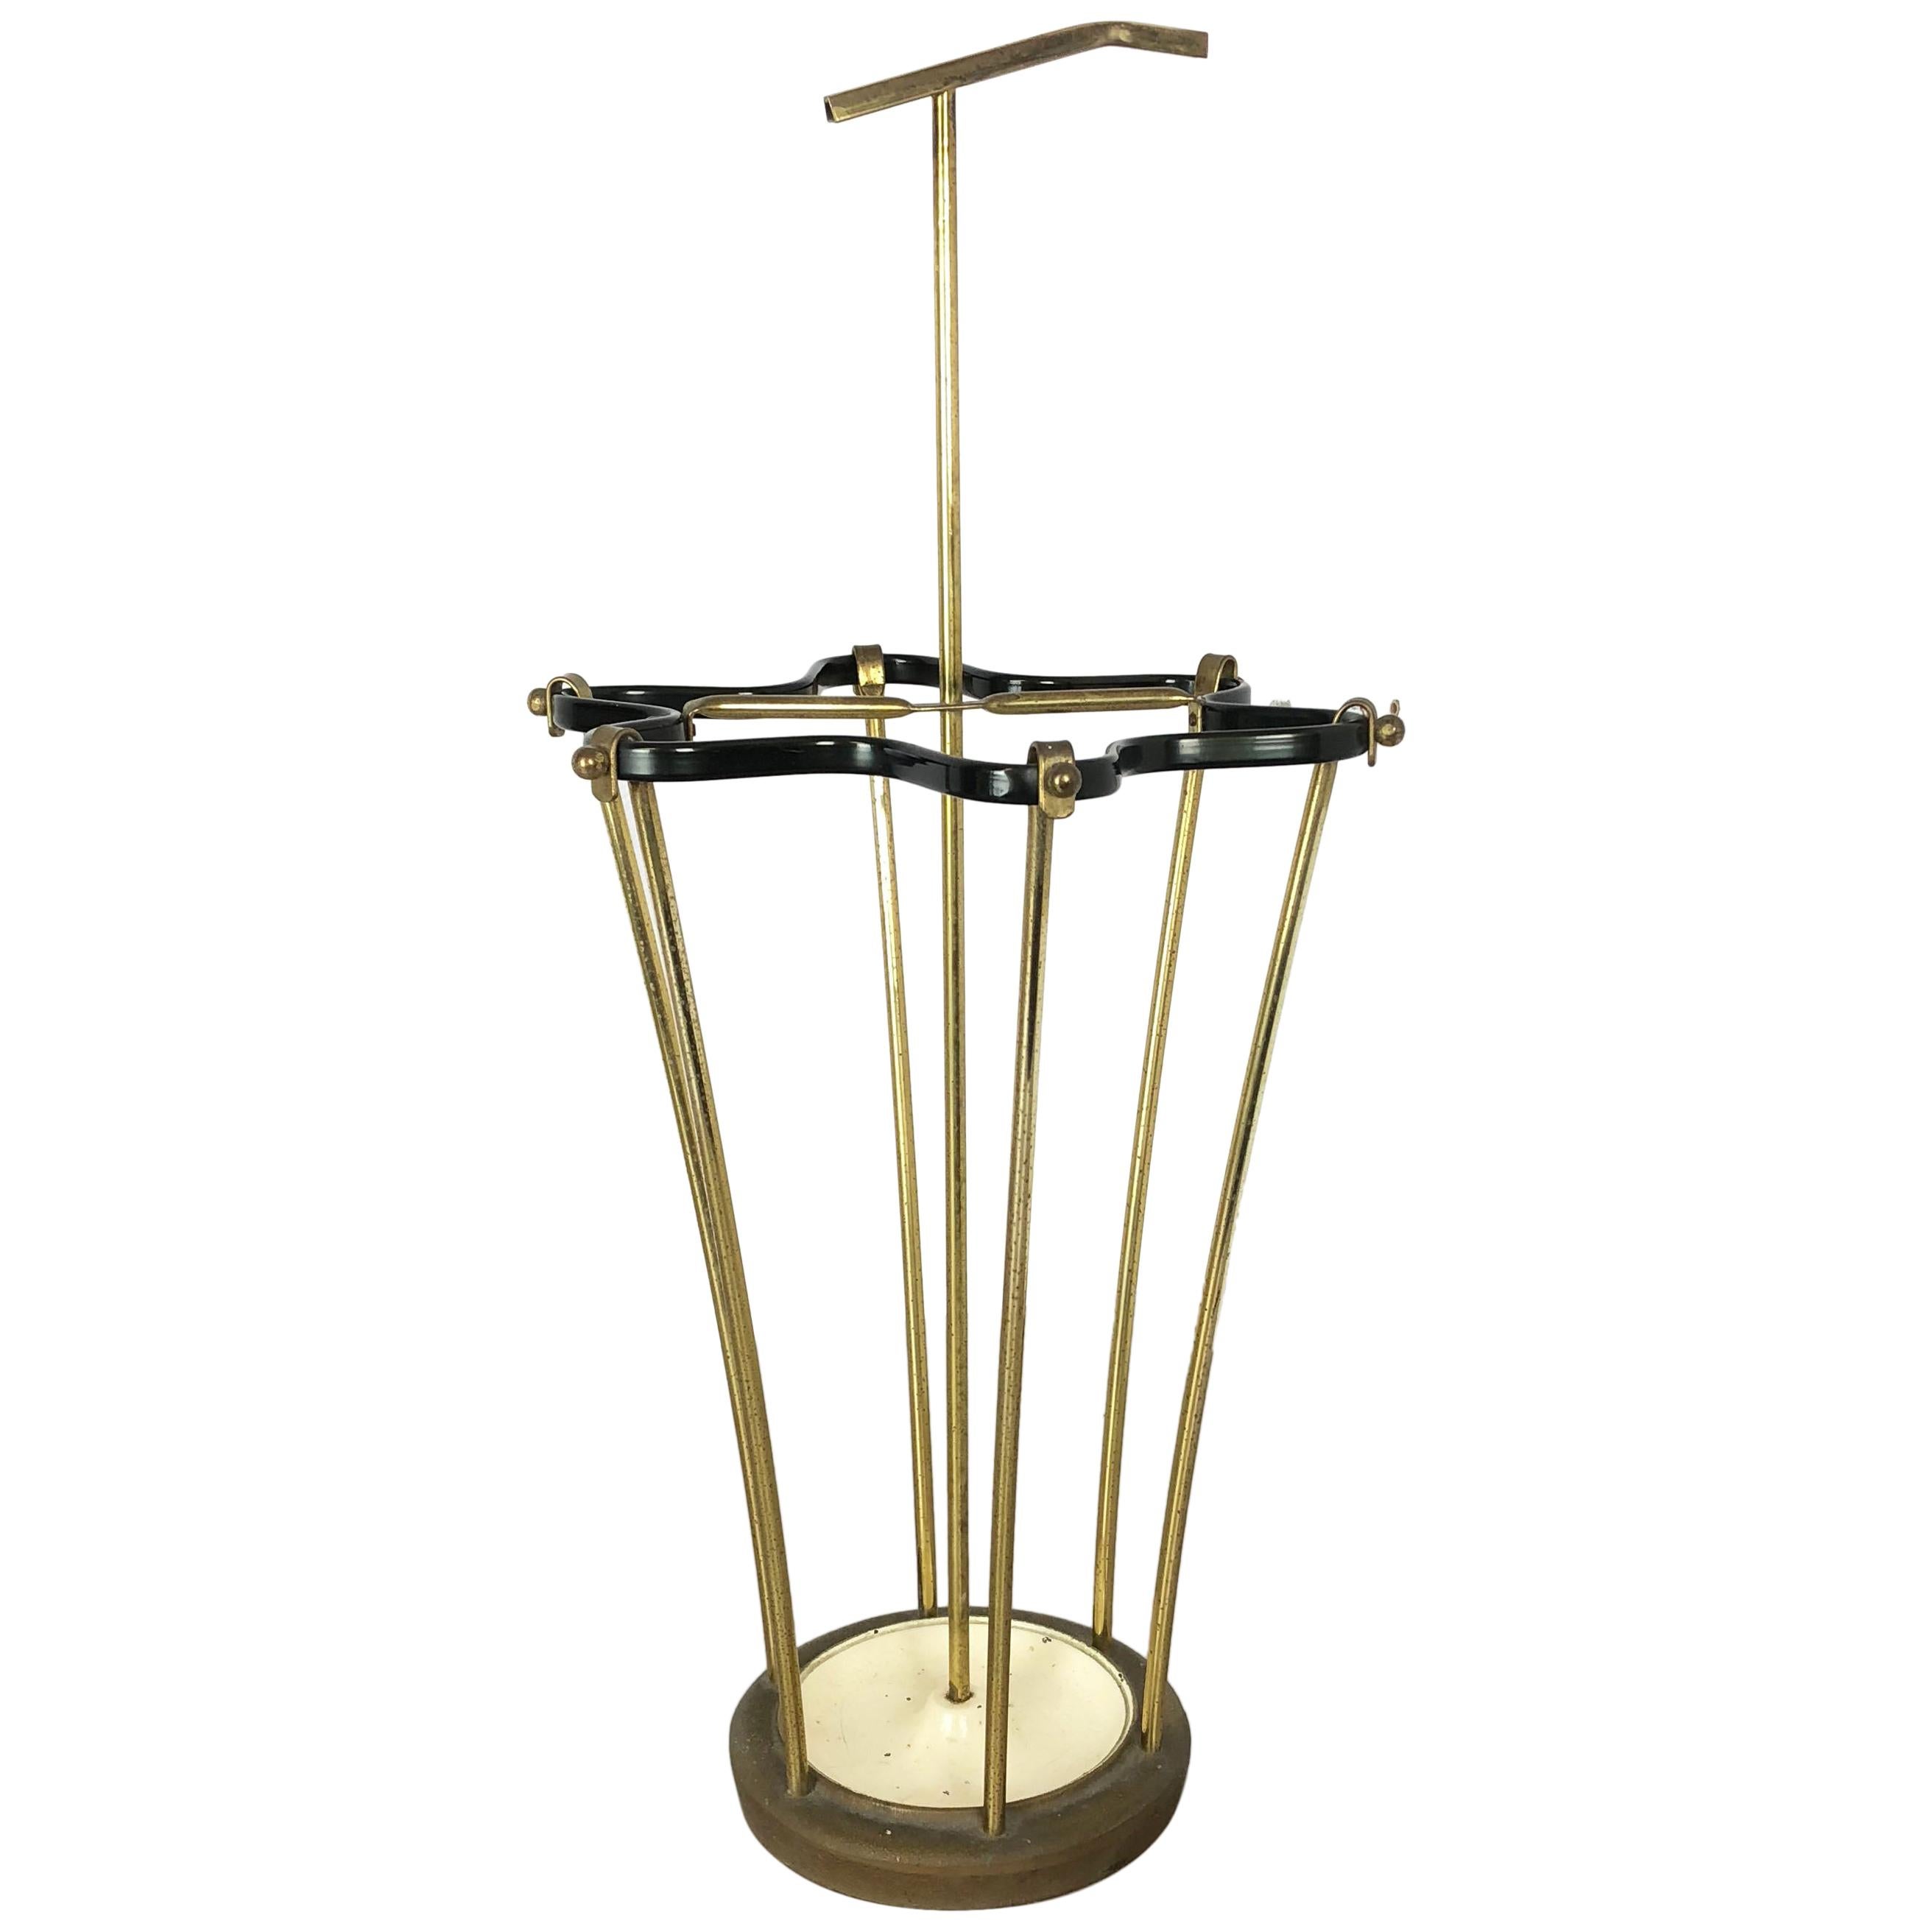 Midcentury Brass Mategot Style Hollywood Regency Umbrella Stand, France, 1950s For Sale